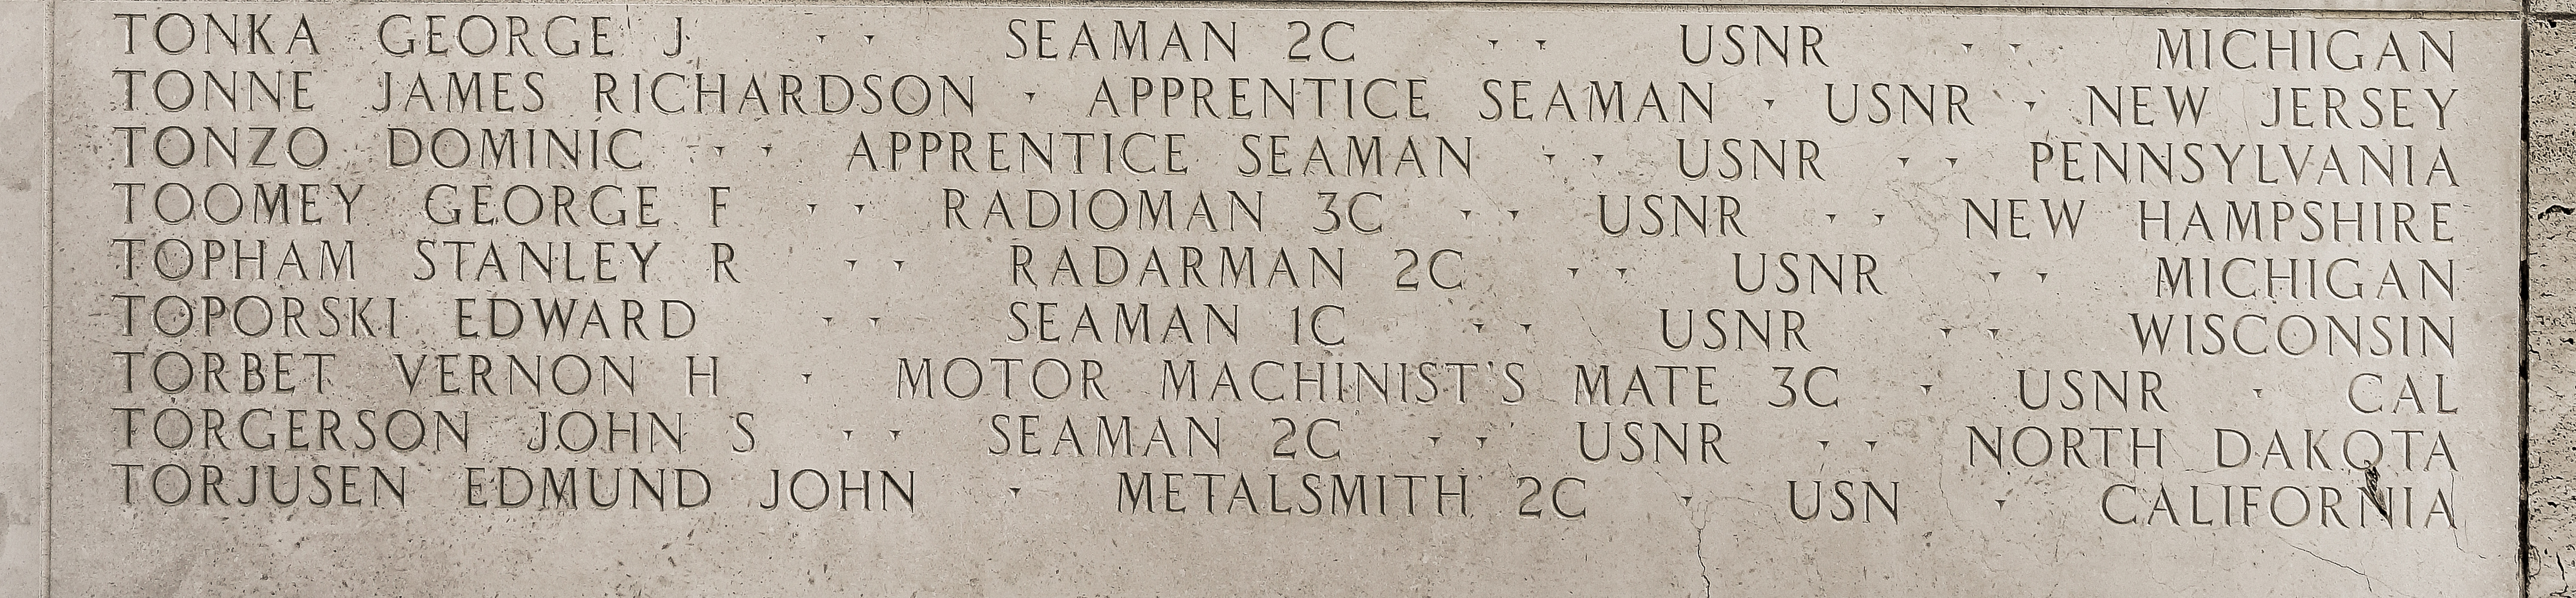 James Richardson Tonne, Apprentice Seaman